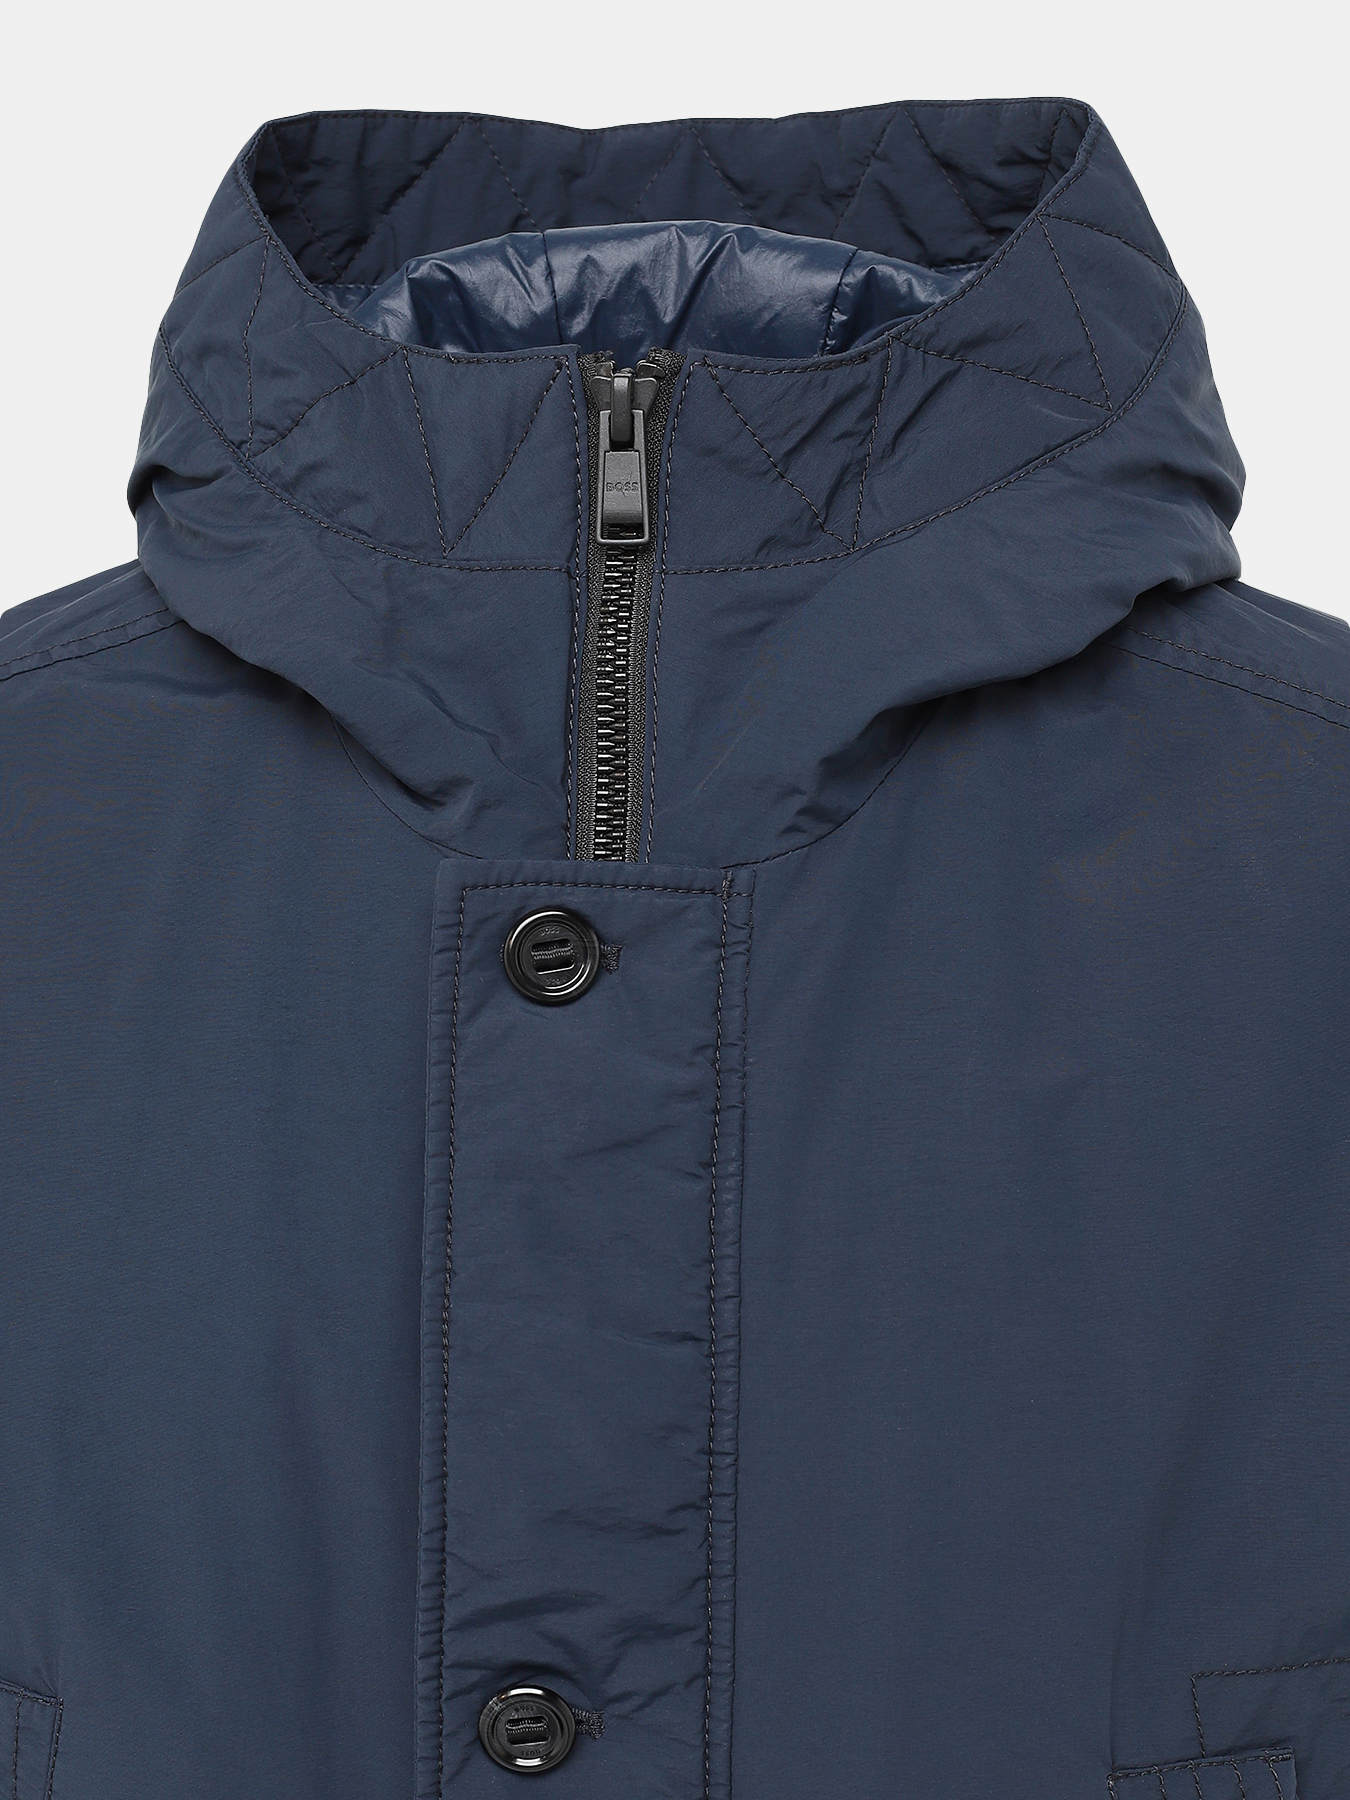 Удлиненная куртка Olgara BOSS 437892-029, цвет темно-синий, размер 56 - фото 5